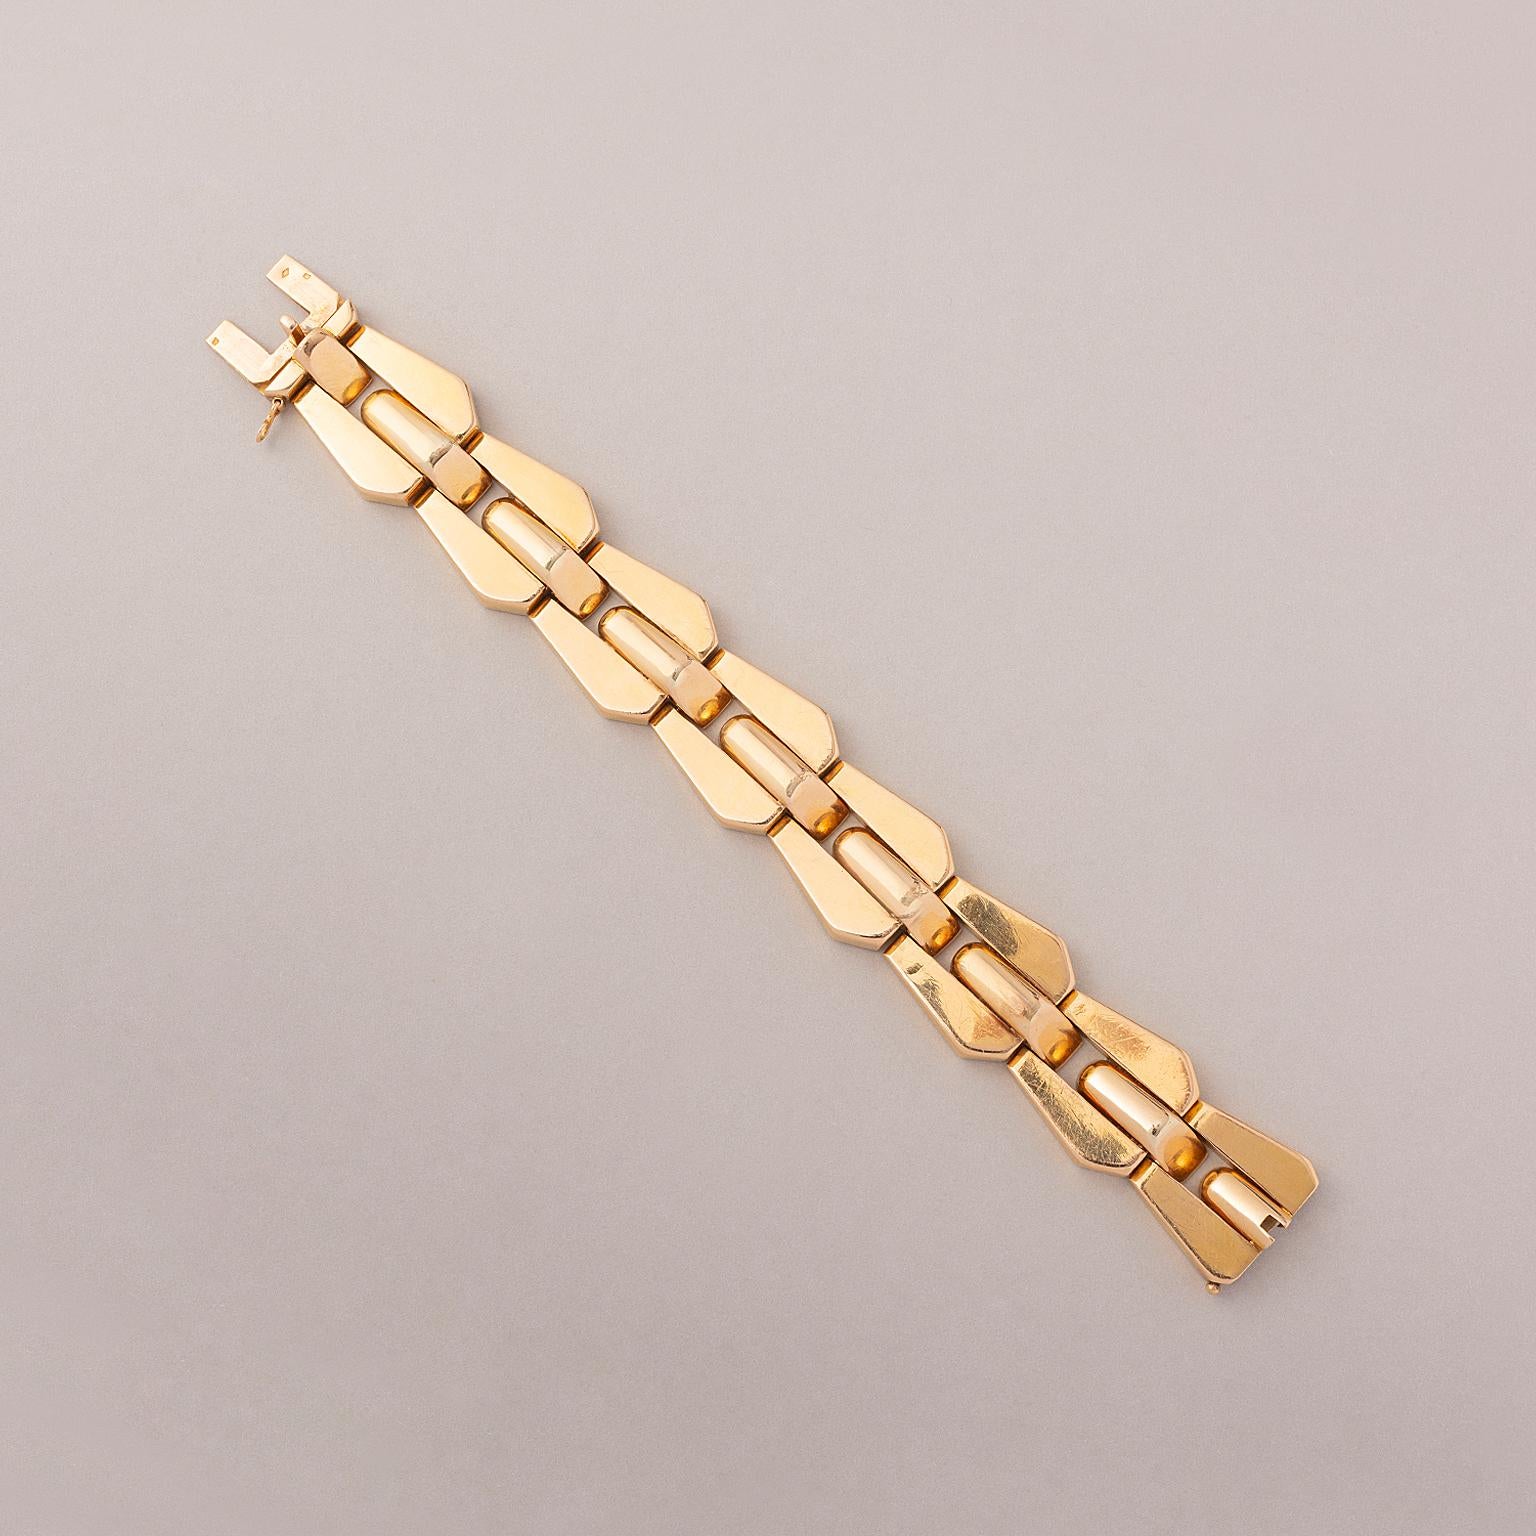 An 18 carat gold tank bracelet, France, circa 1935.

weight: 66.81 gram
dimensions: 18 x 2.2 cm